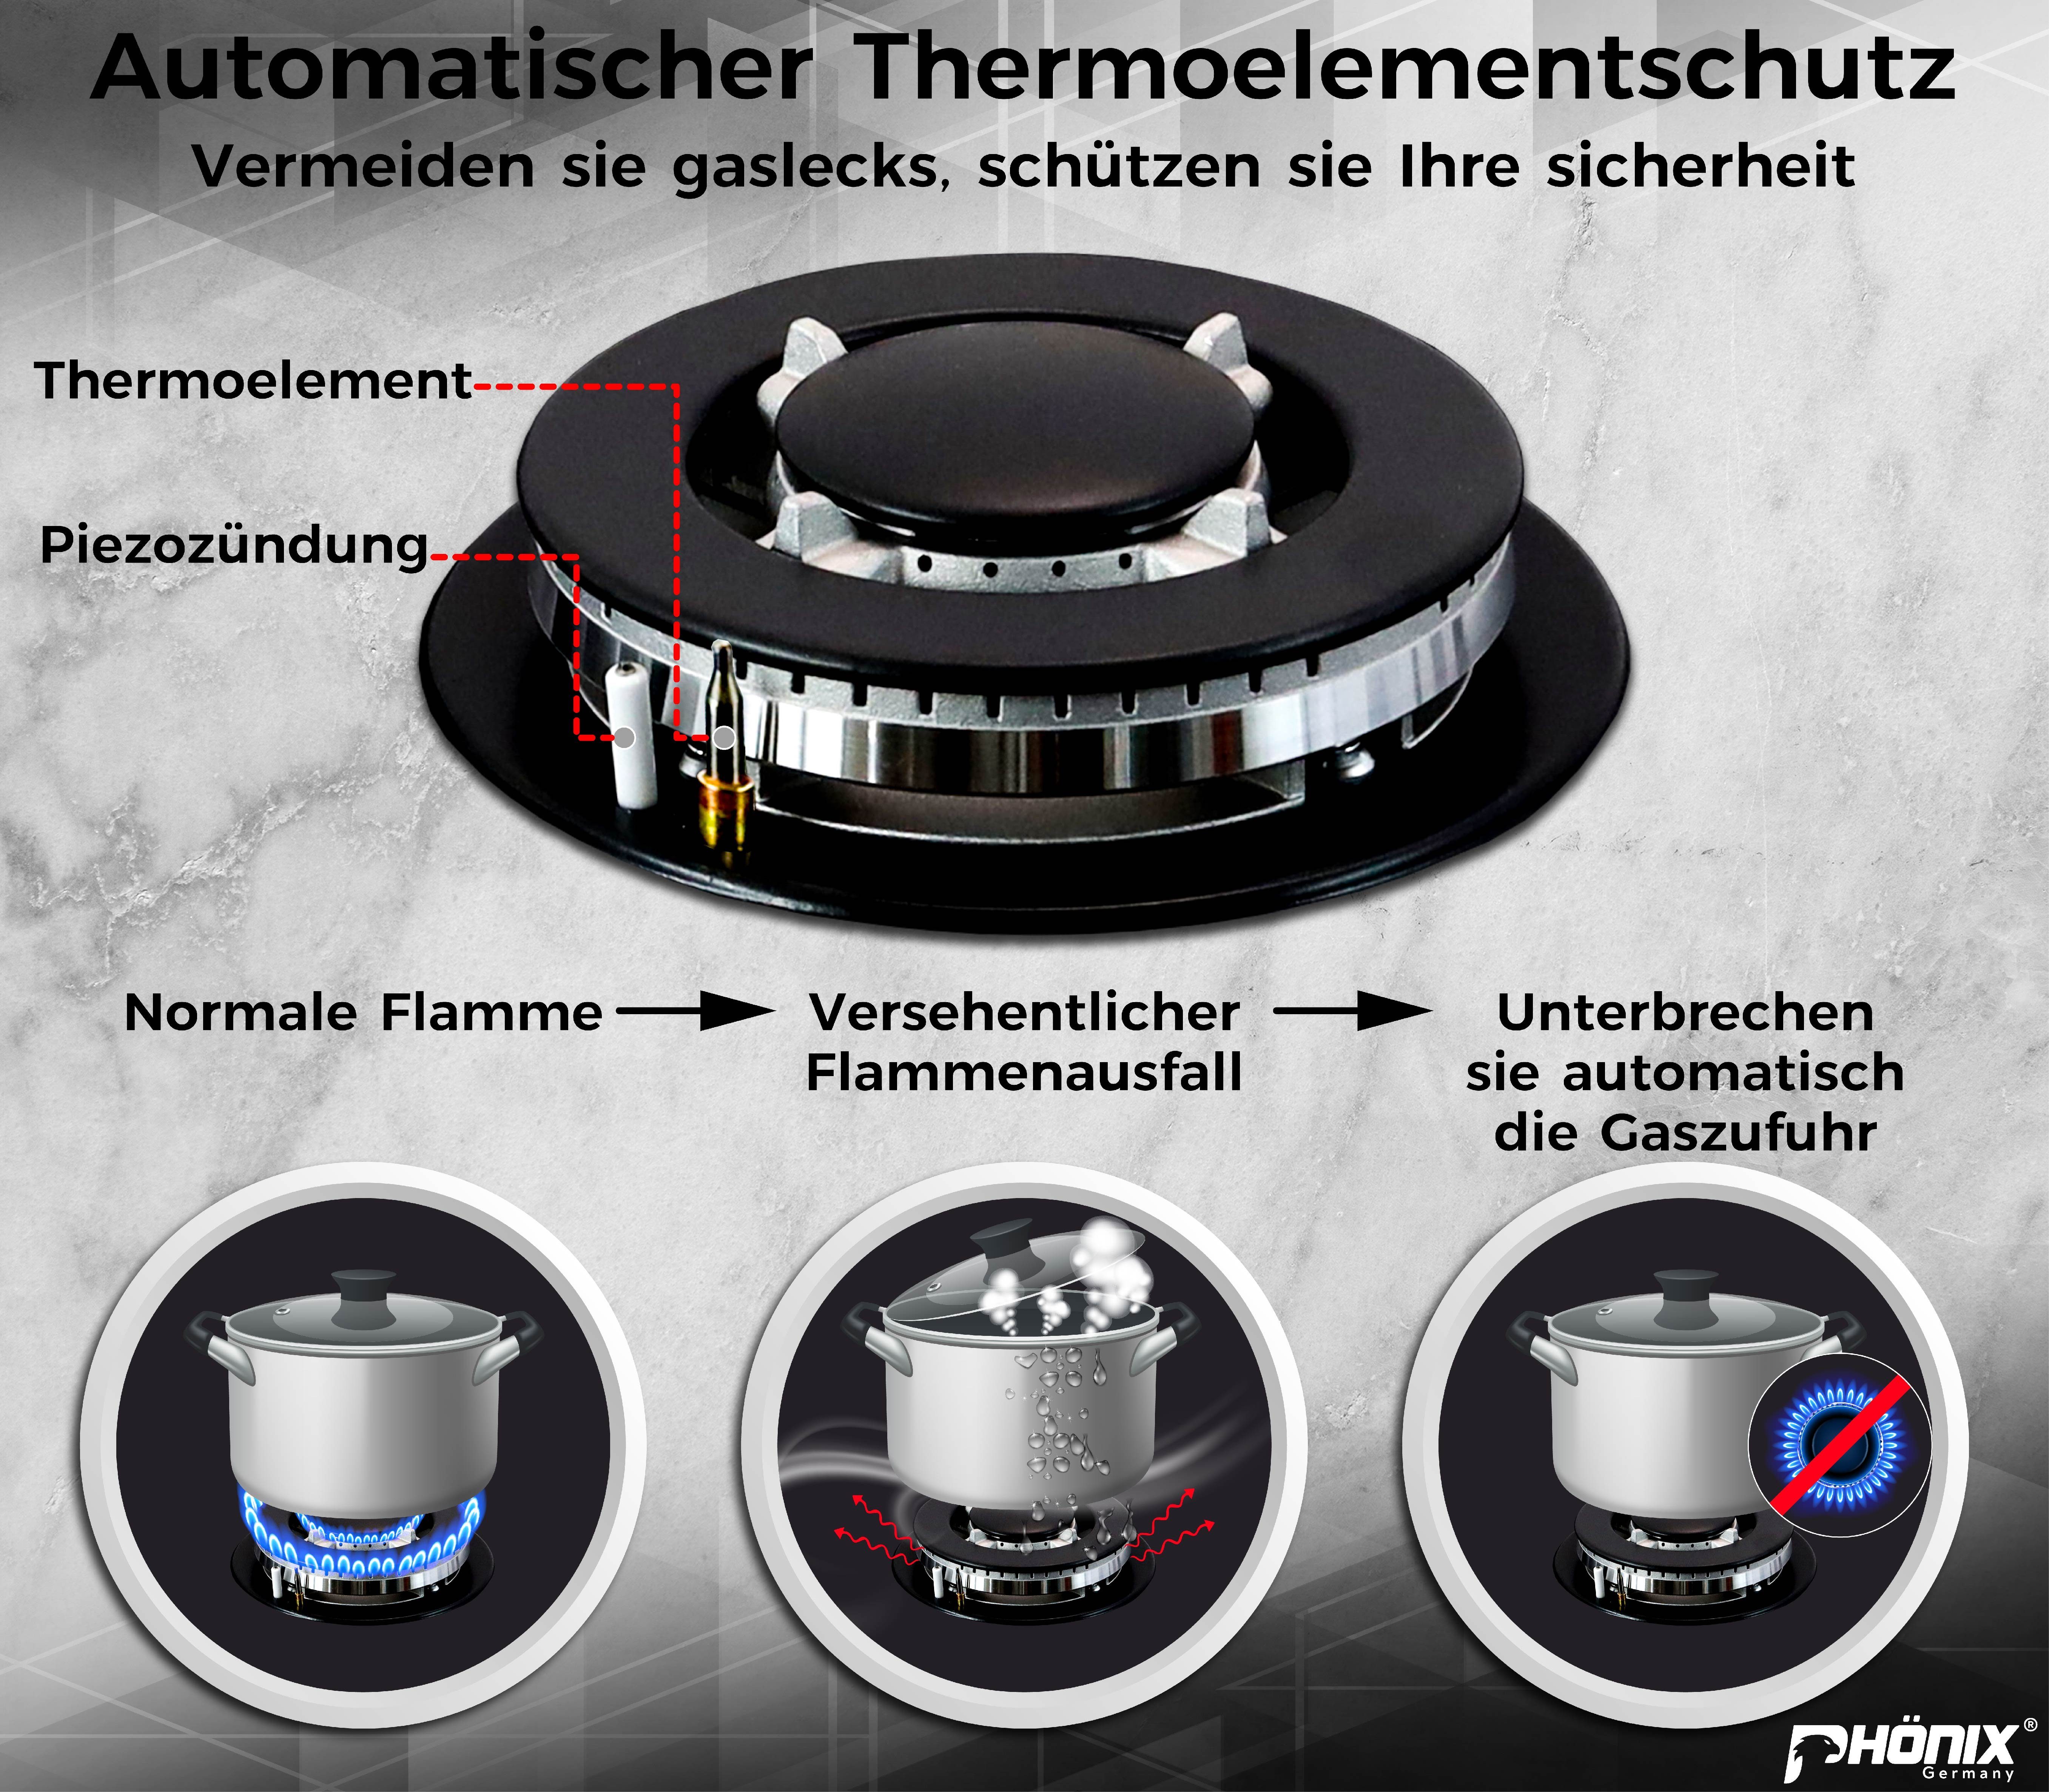 Phönix 112-GBT, Gaskocher 2 flammig Gas-Kochfeld / mit Germany Erdgas Glas Zündsicherung, Propan-